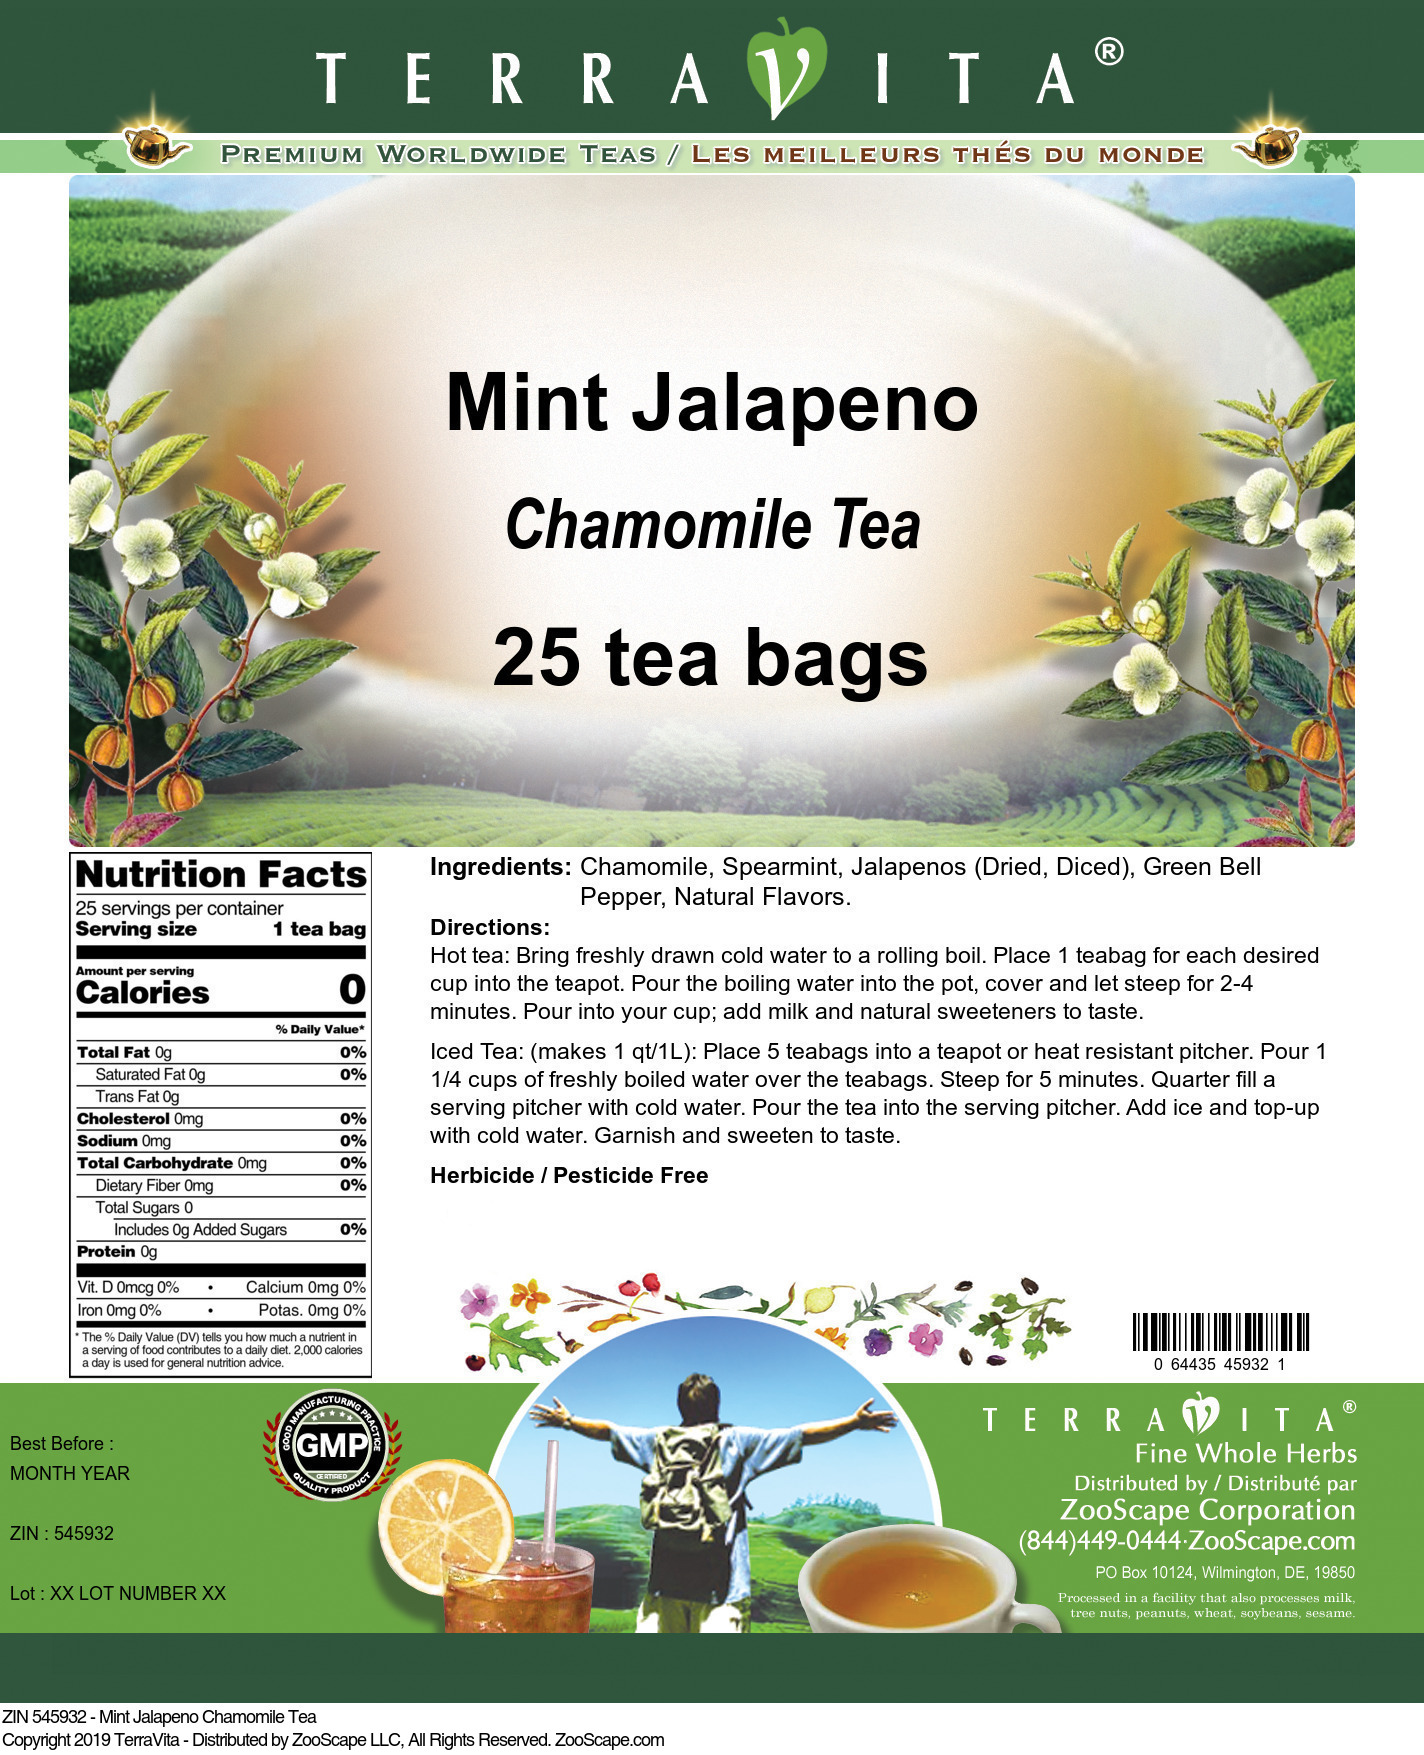 Mint Jalapeno Chamomile Tea - Label